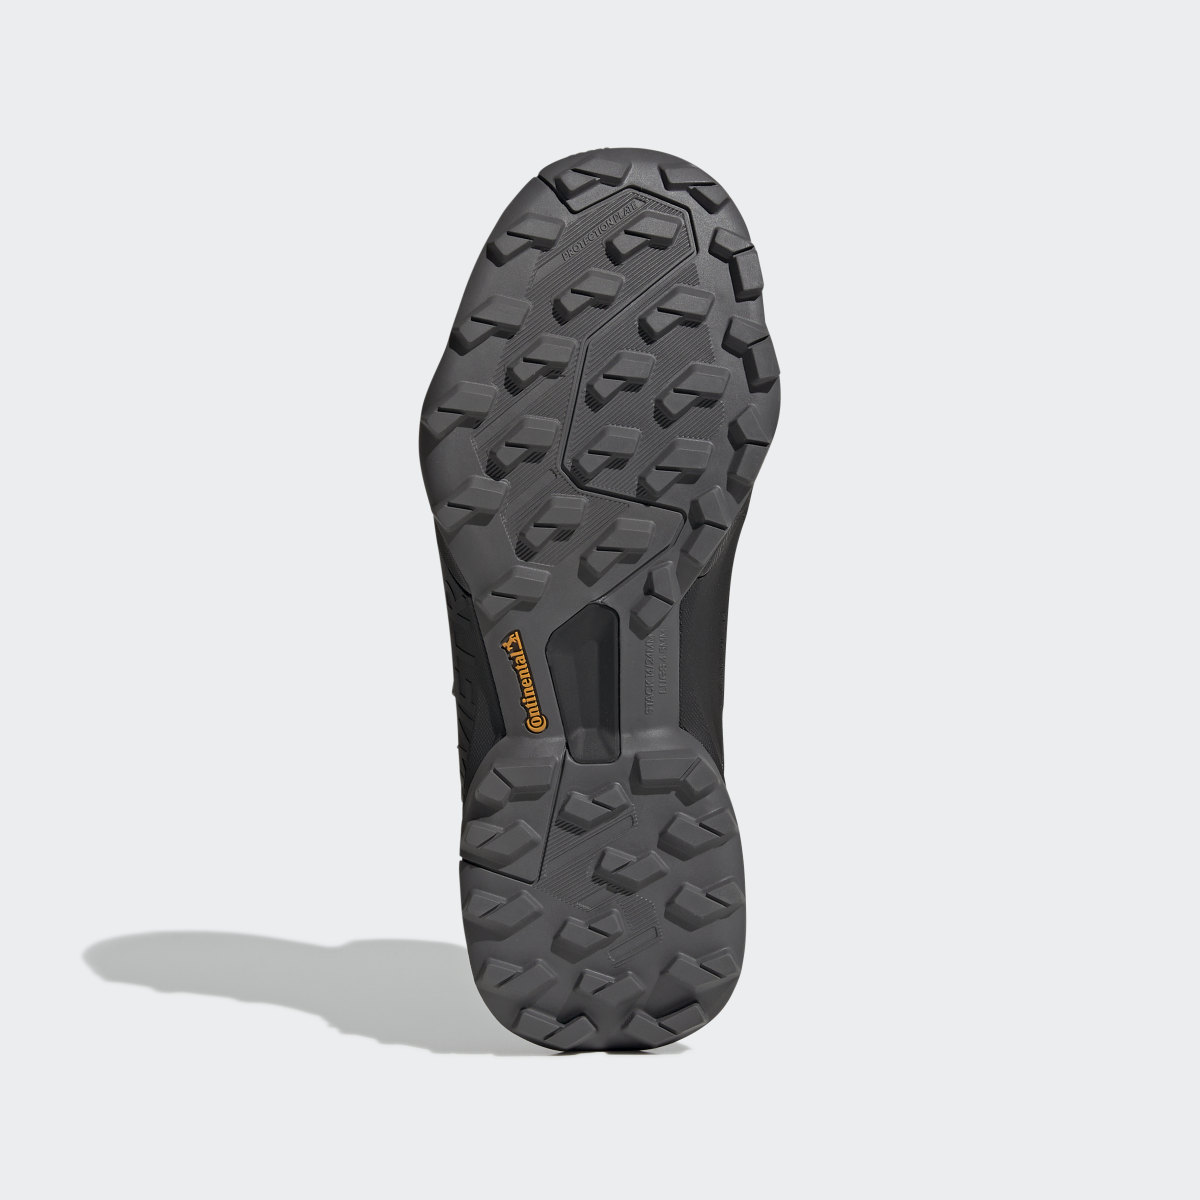 Adidas Terrex Swift R3 Mid GORE-TEX Hiking Shoes. 7